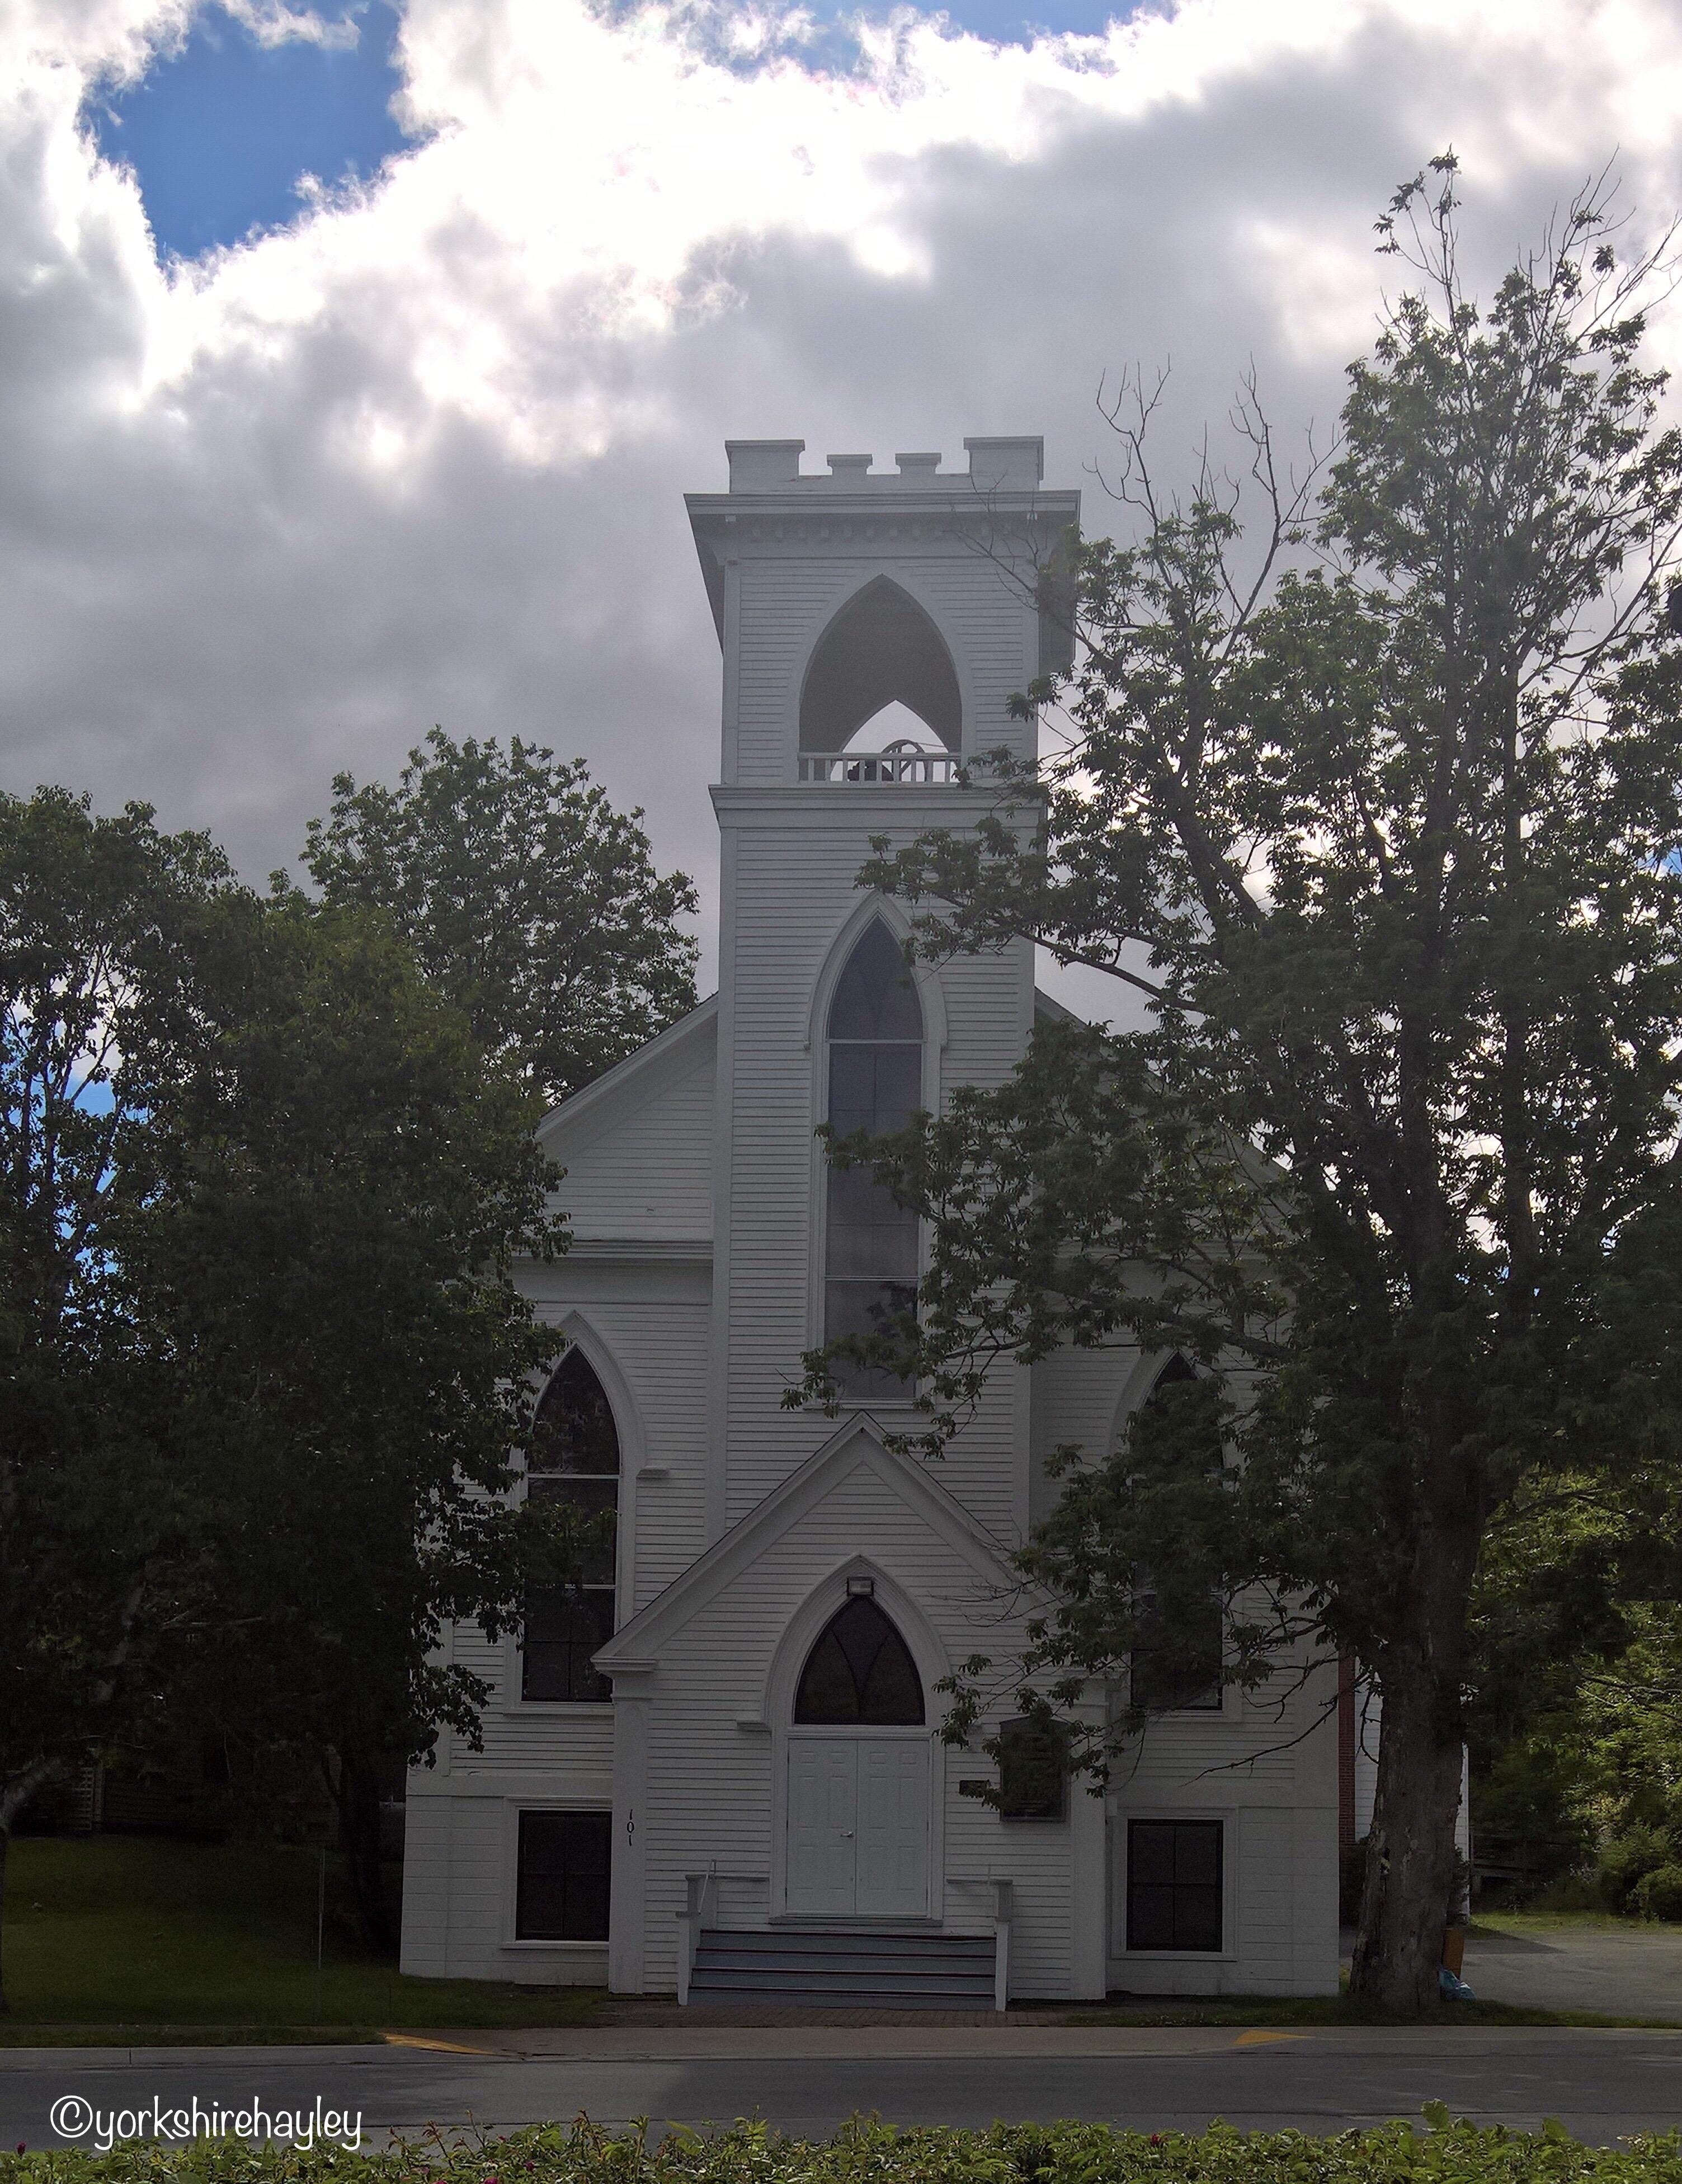 The third church in Mahone Bay